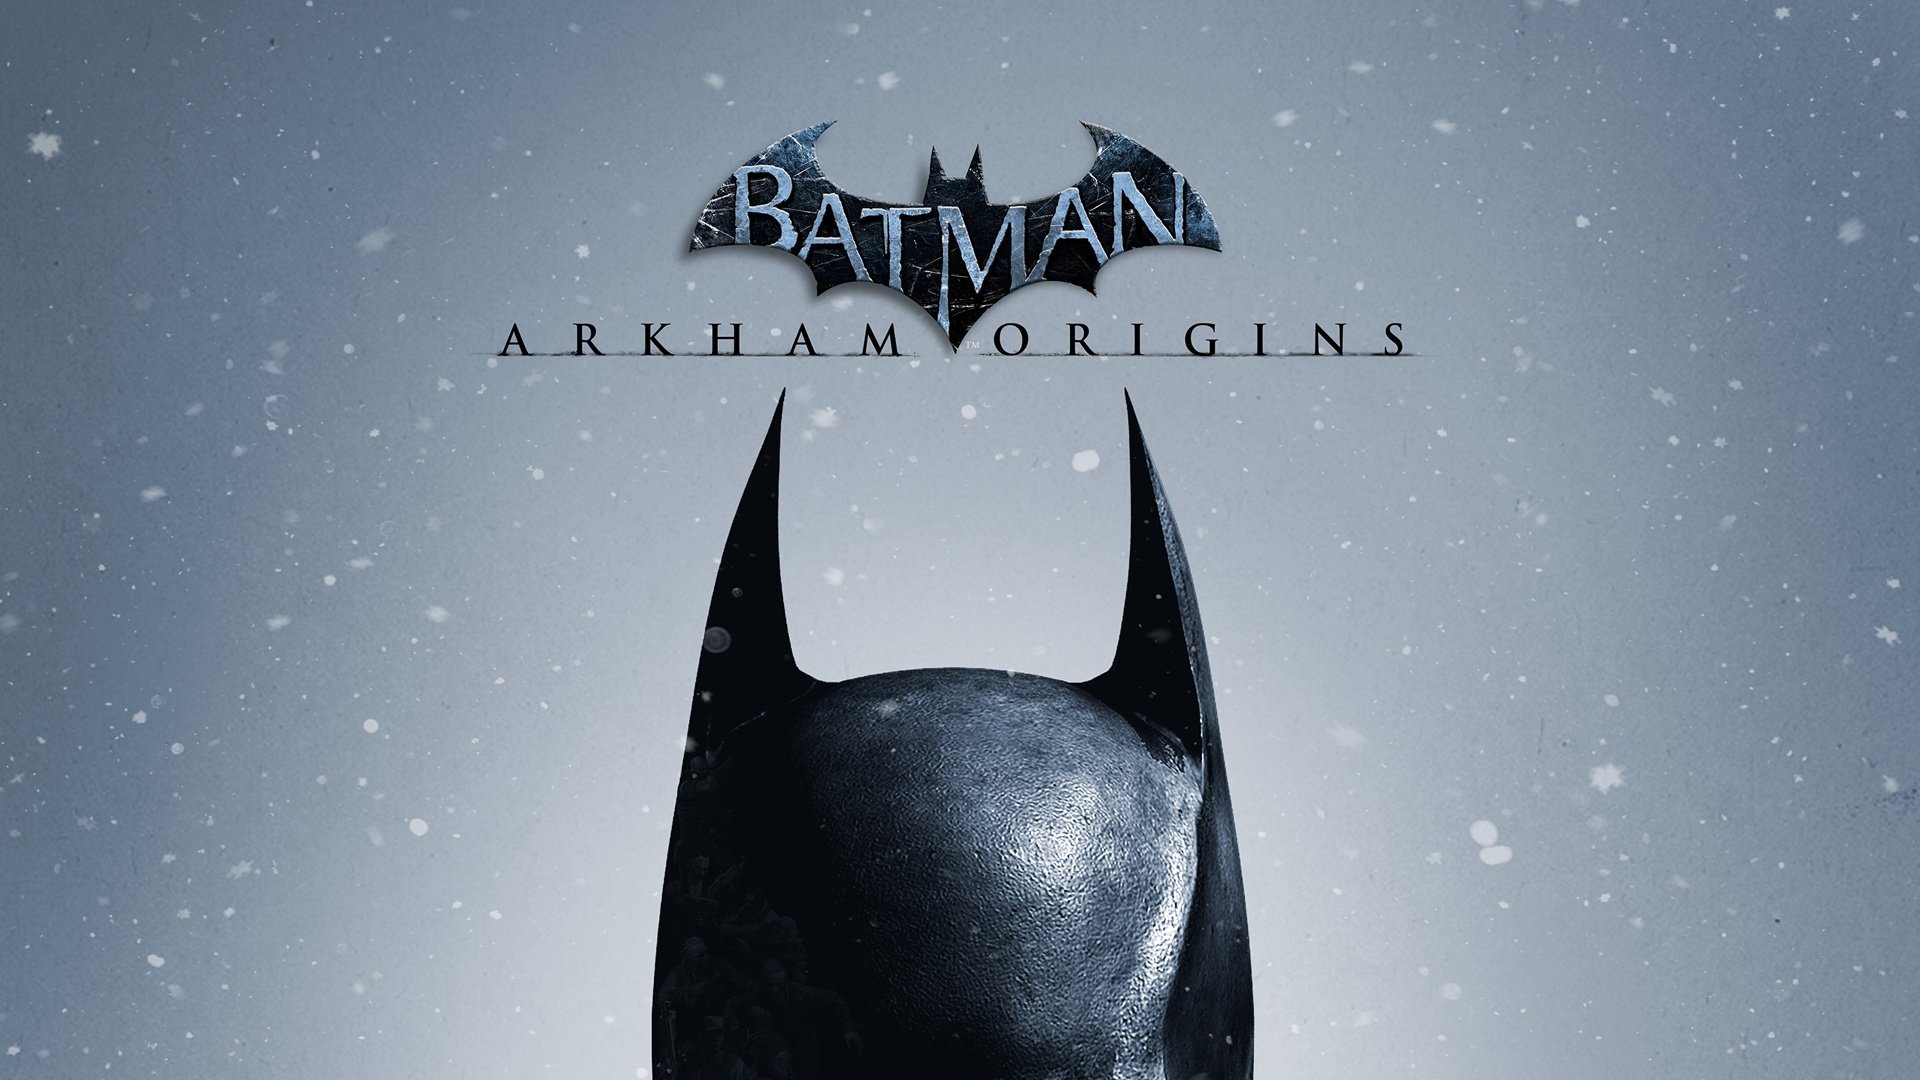 Download full hd 1080p Batman: Arkham Origins computer wallpaper ID:323017 for free